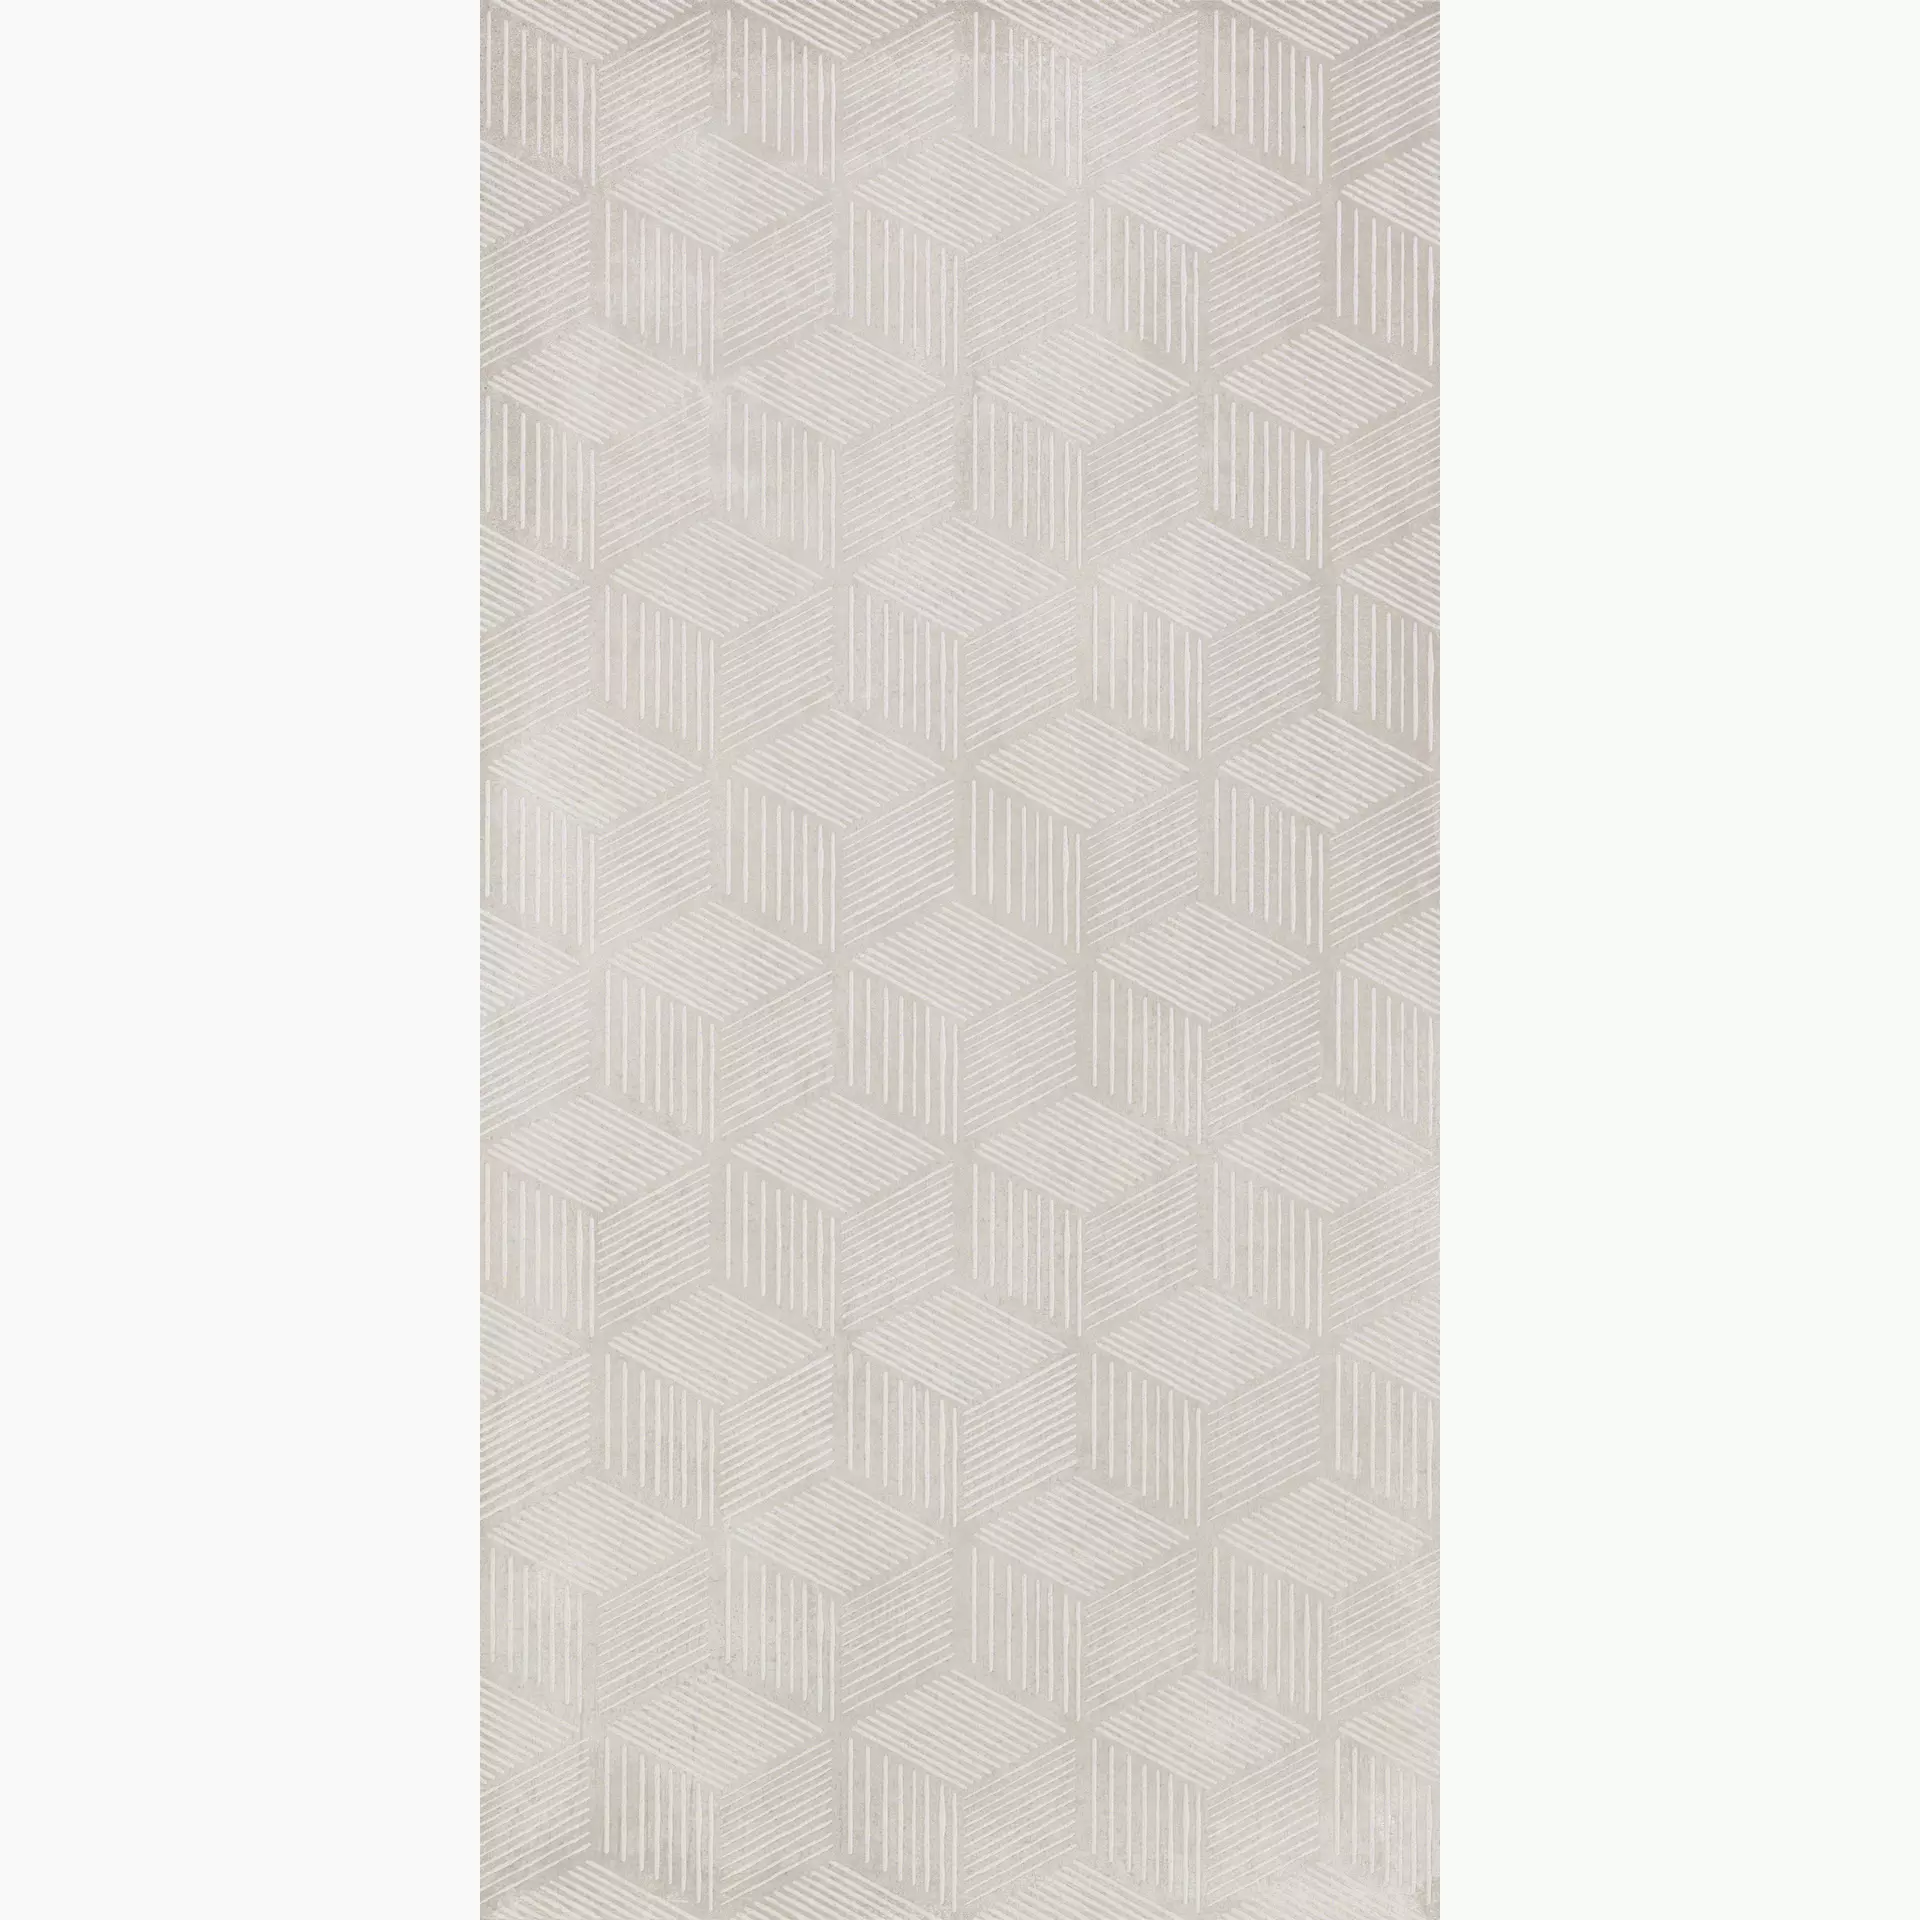 KRONOS Prima Materia Cenere Naturale Hexagon 8207 60x120cm 9mm